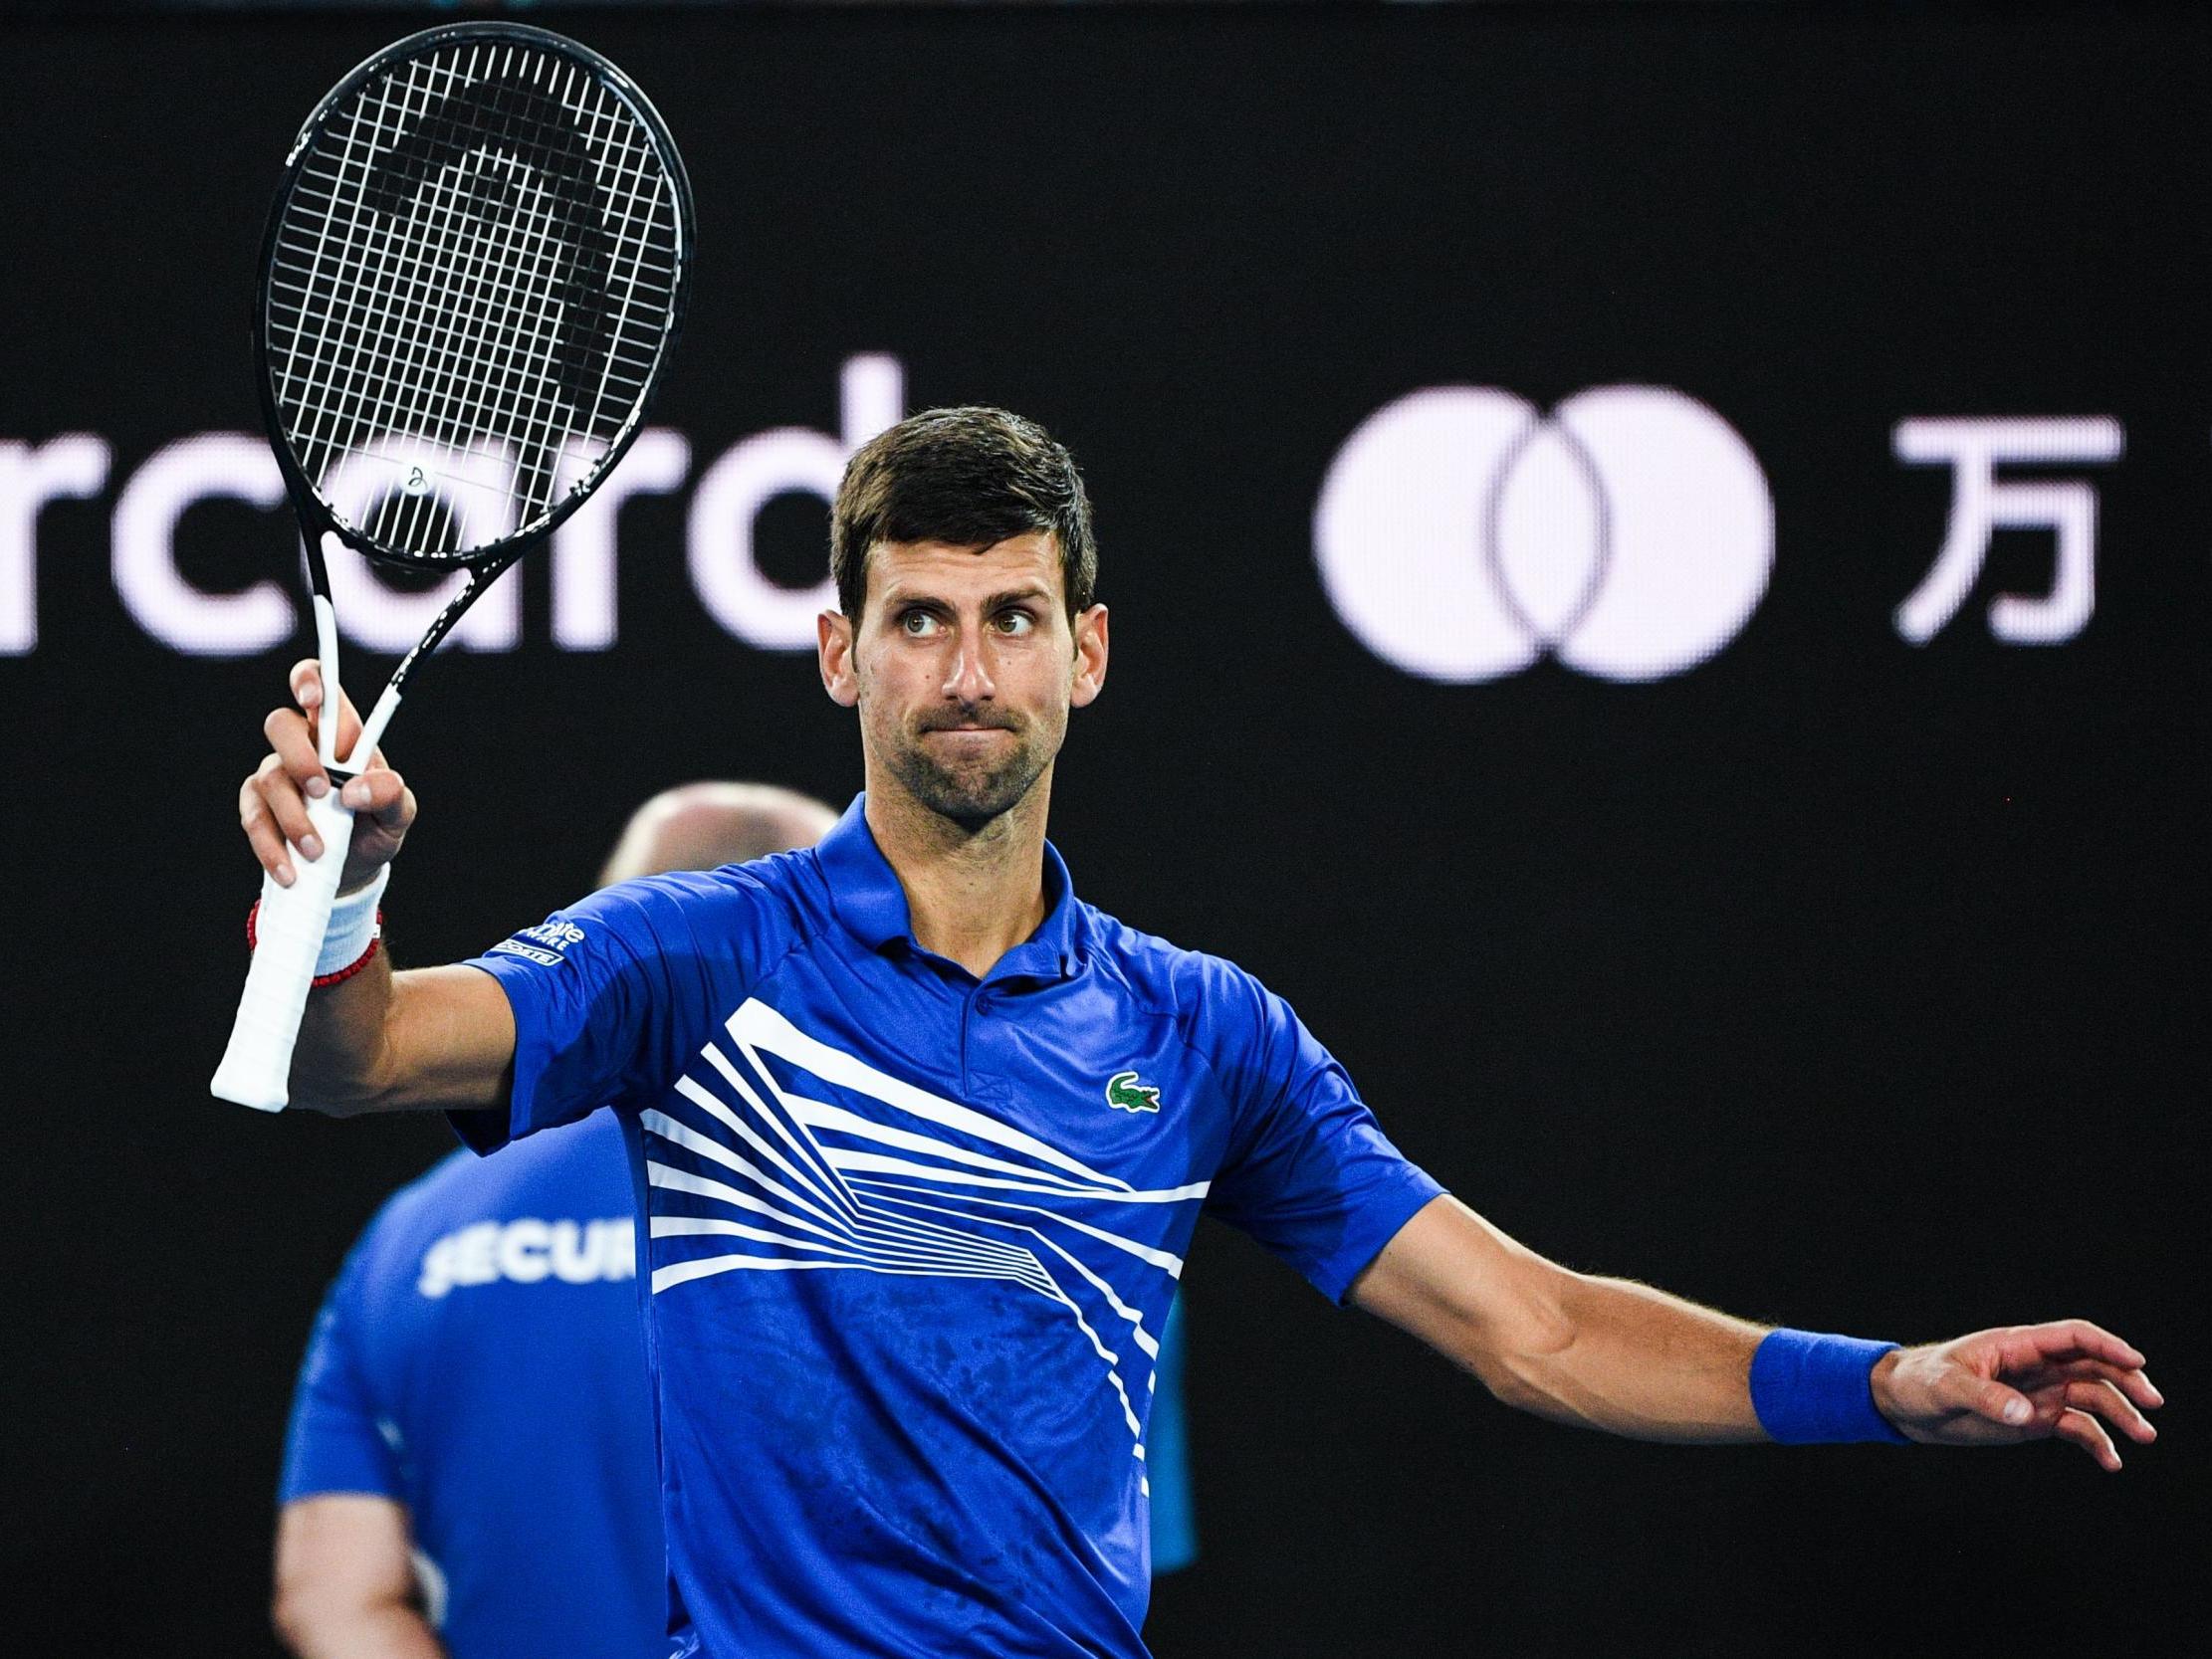 Australian Open 2019 Novak Djokovic through to semifinals after Kei